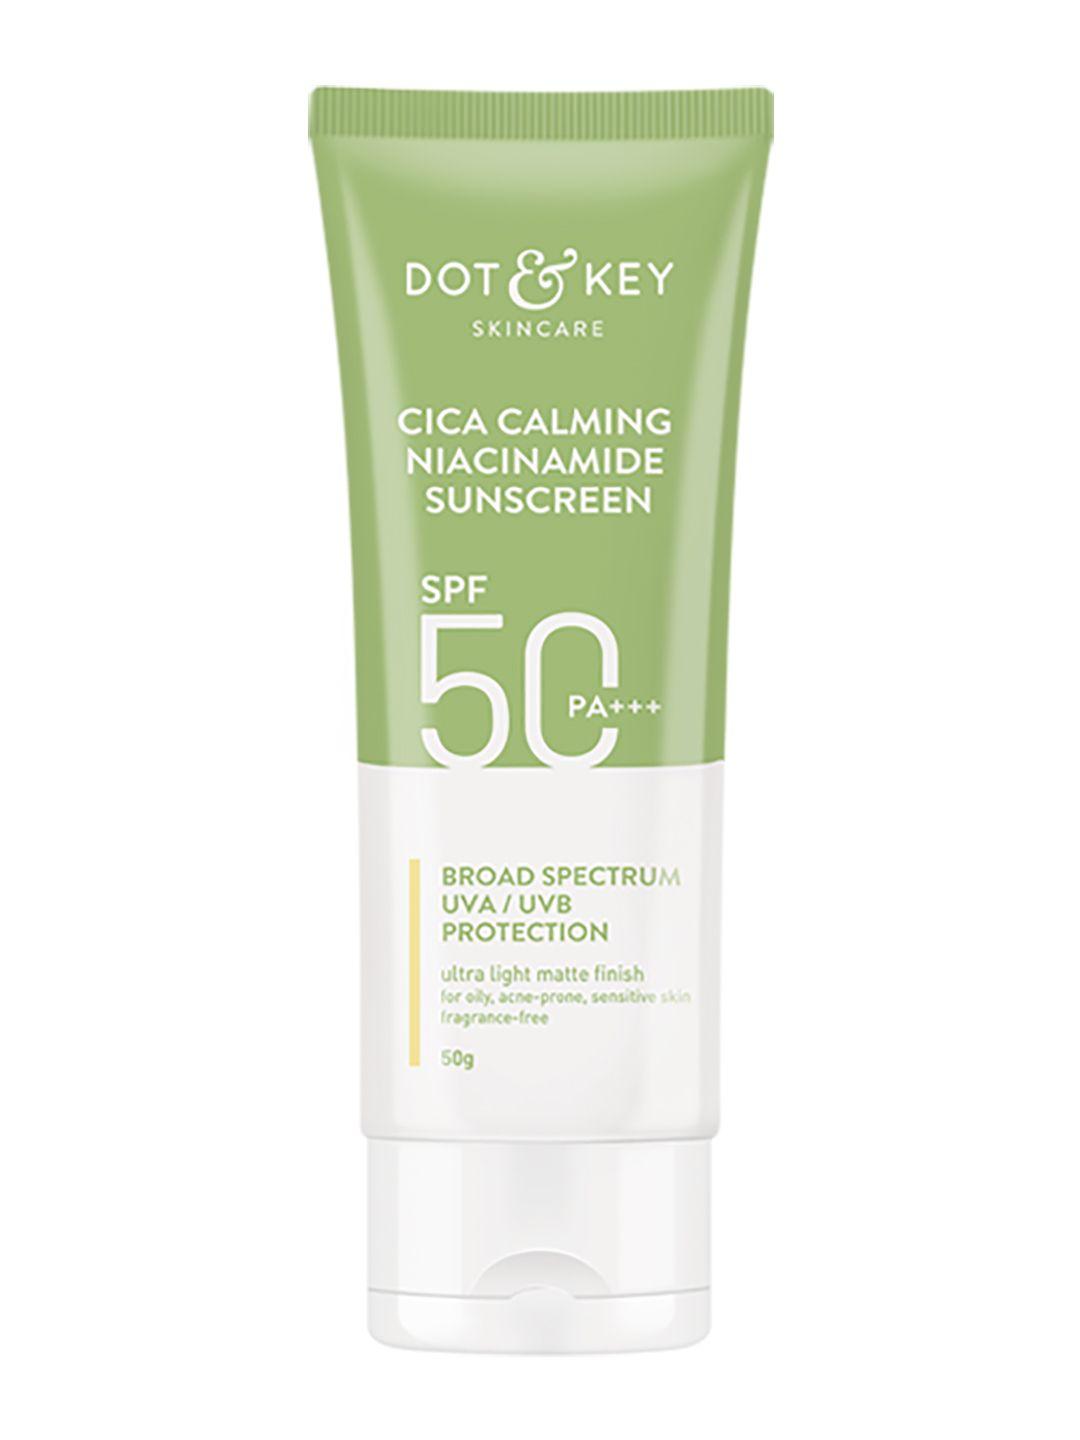 DOT & KEY Cica Calming Niacinamide SPF50 PA+++ Sunscreen - 50g